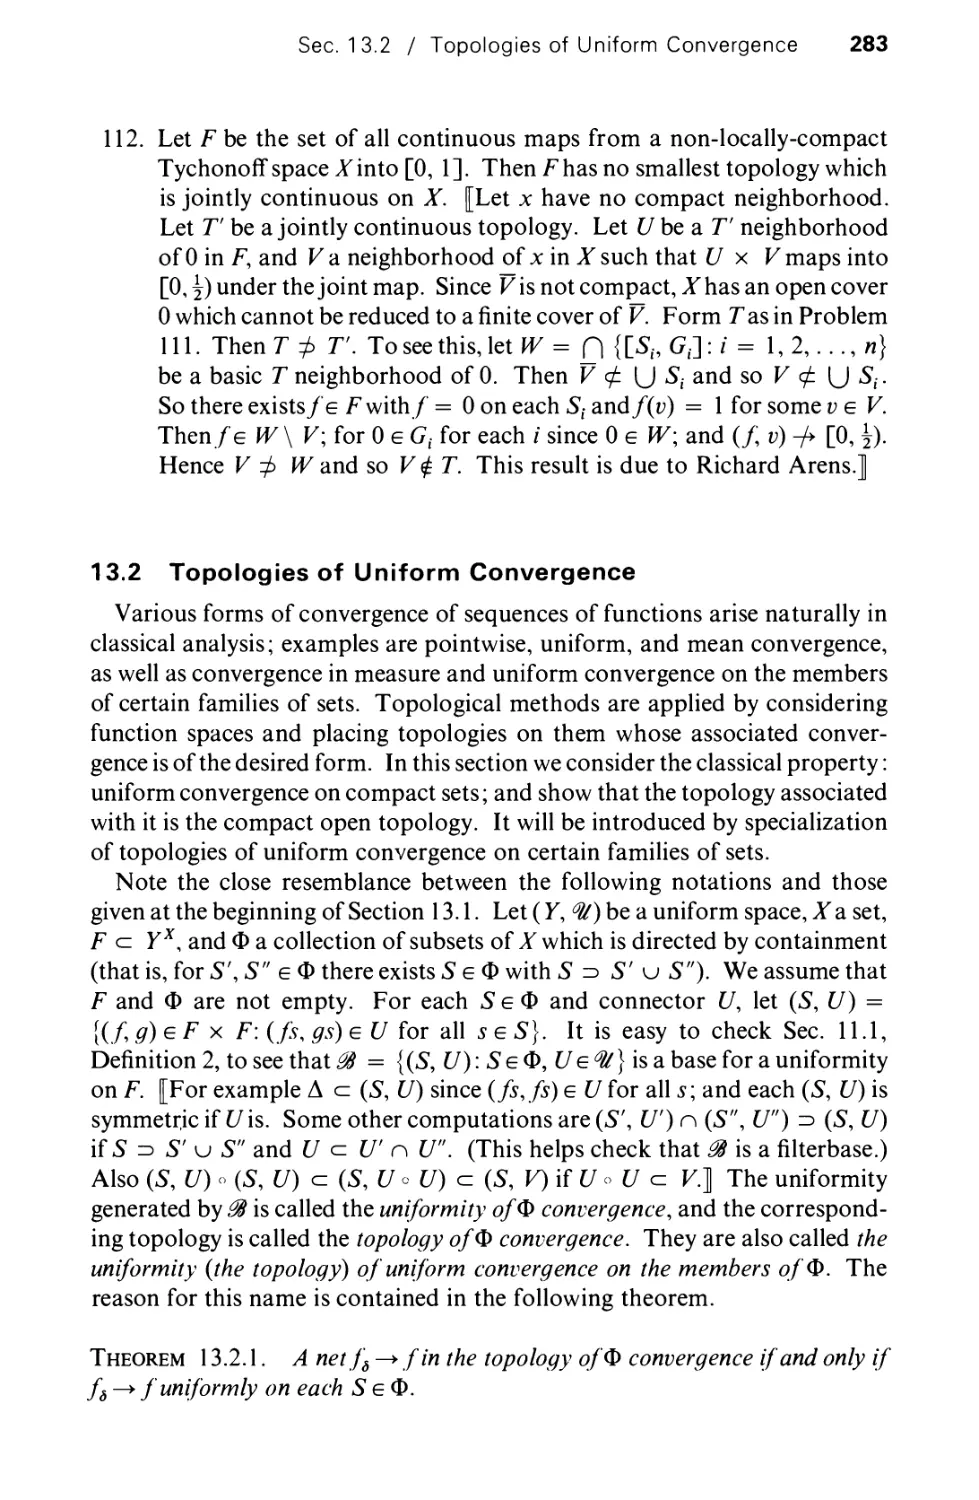 13.2 Topologies of uniform convergence  283